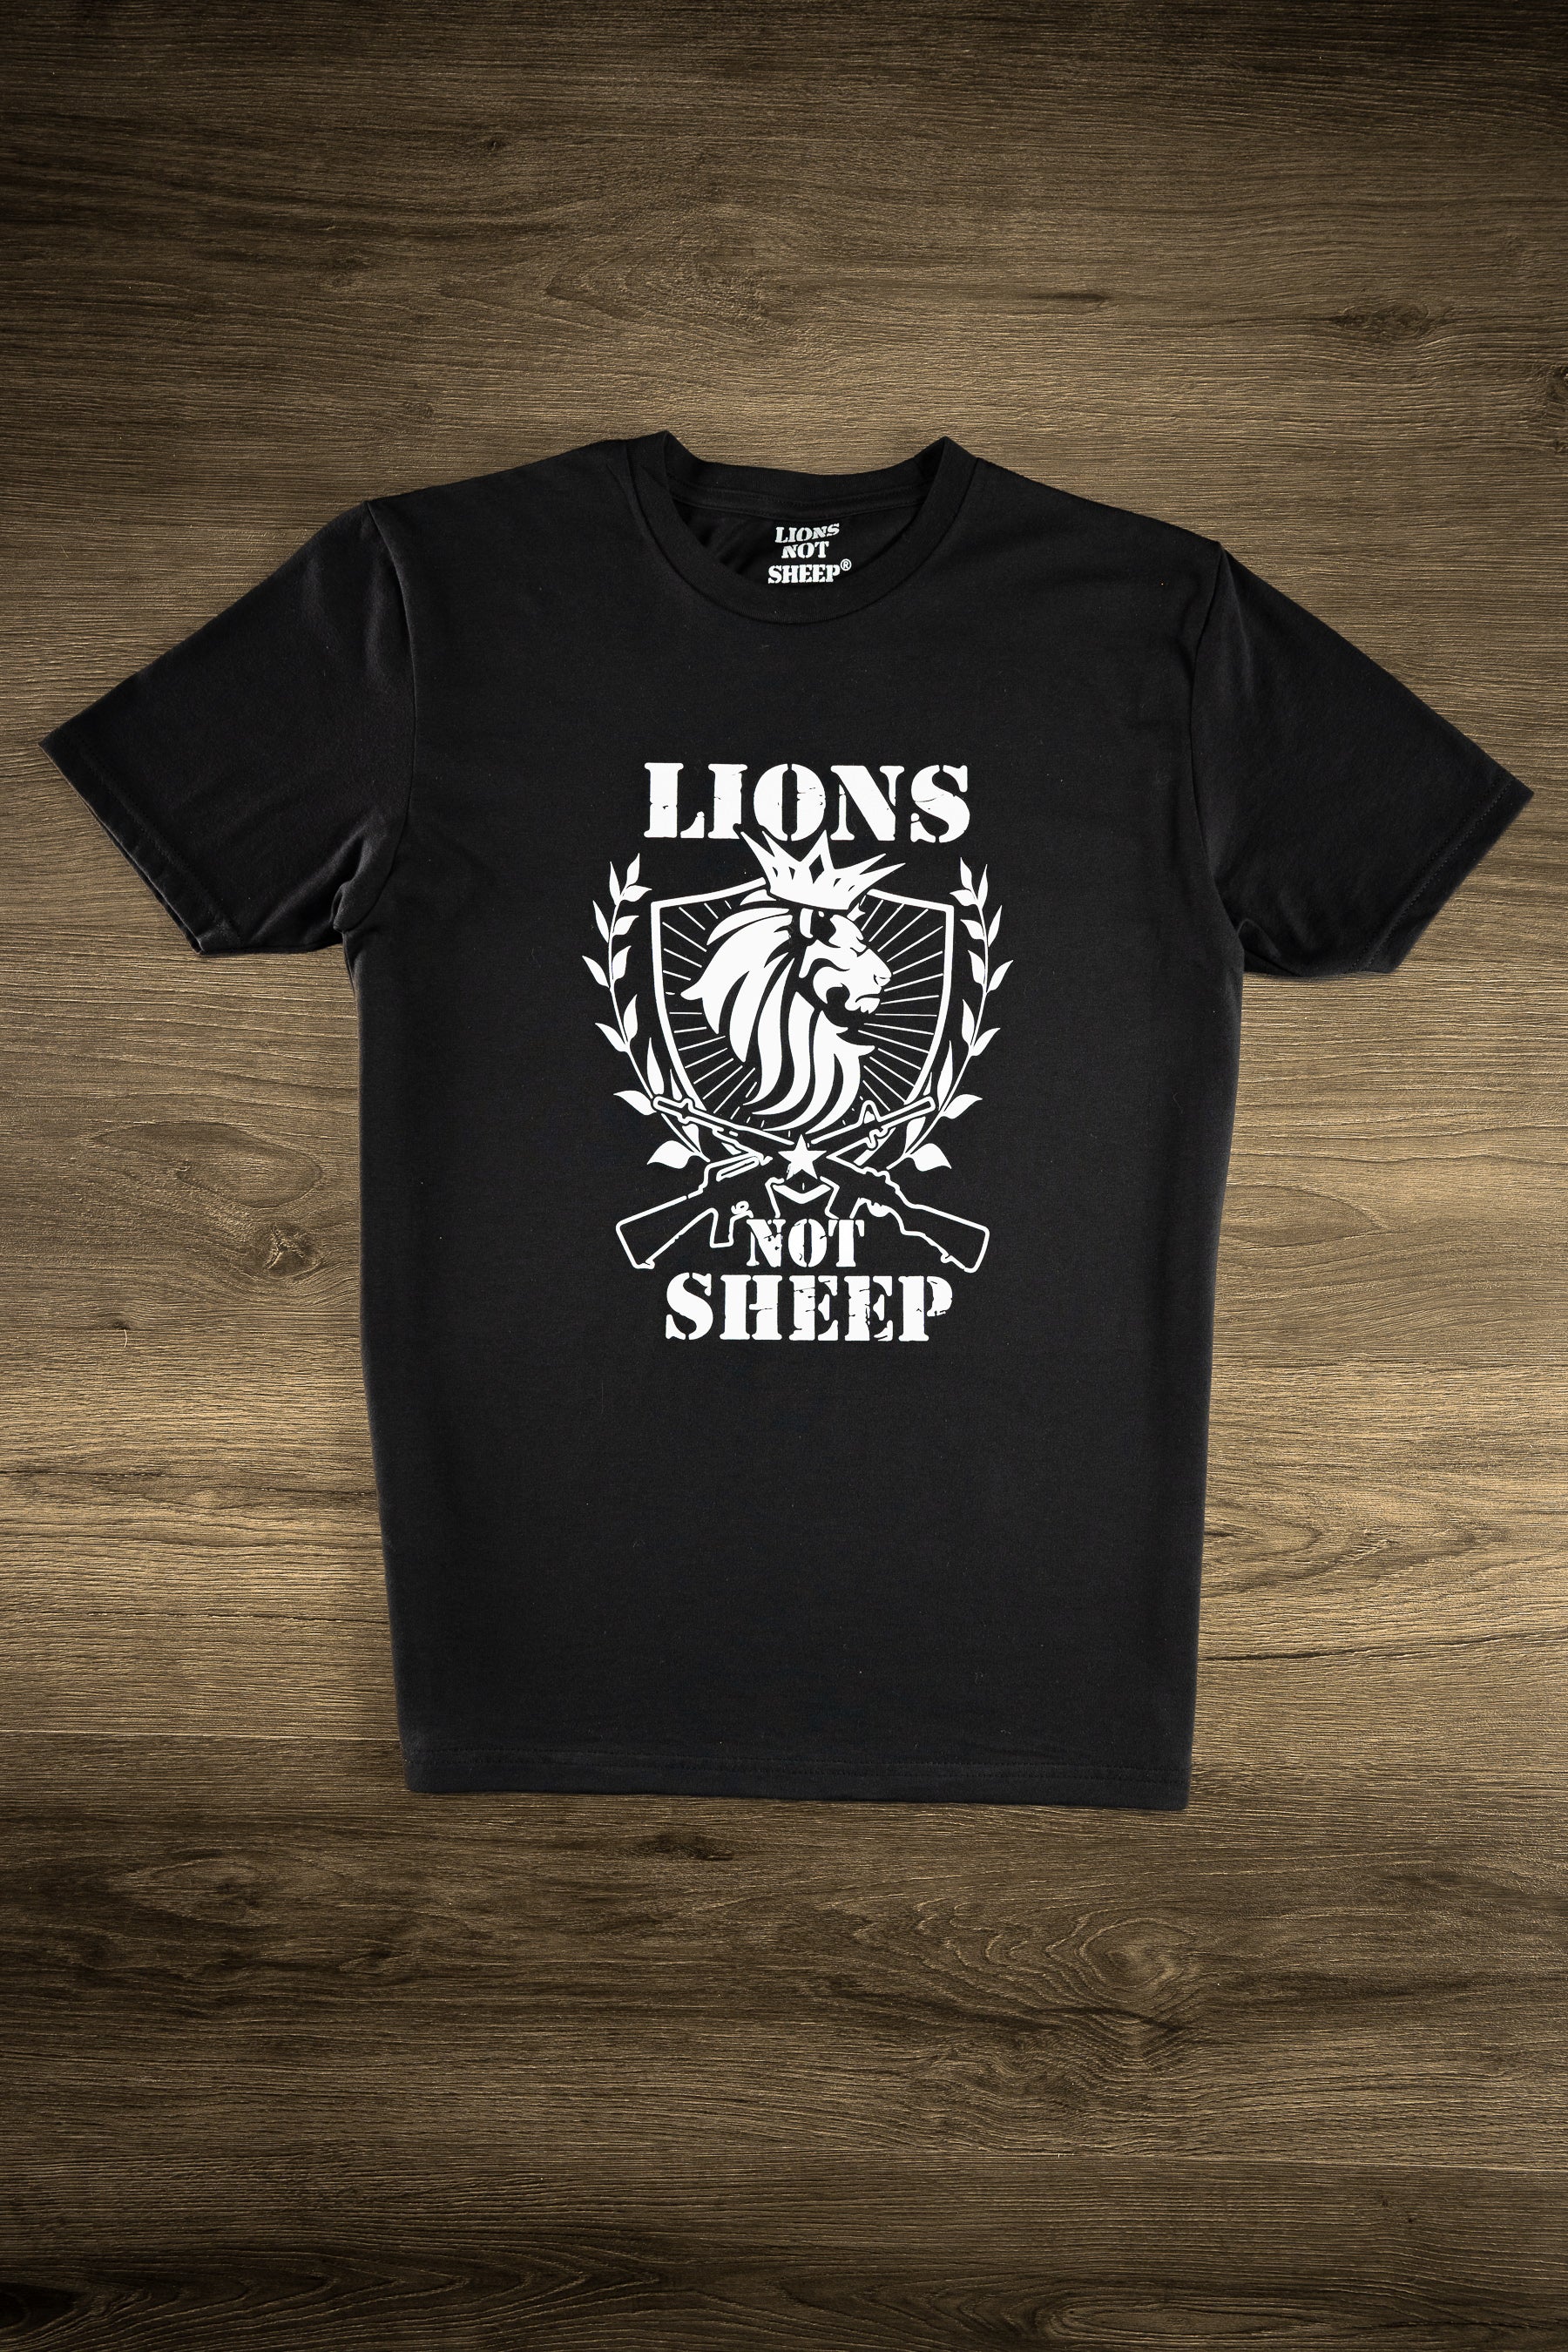 LIONS NOT SHEEP "RIFLE" Tee - Lions Not Sheep ®